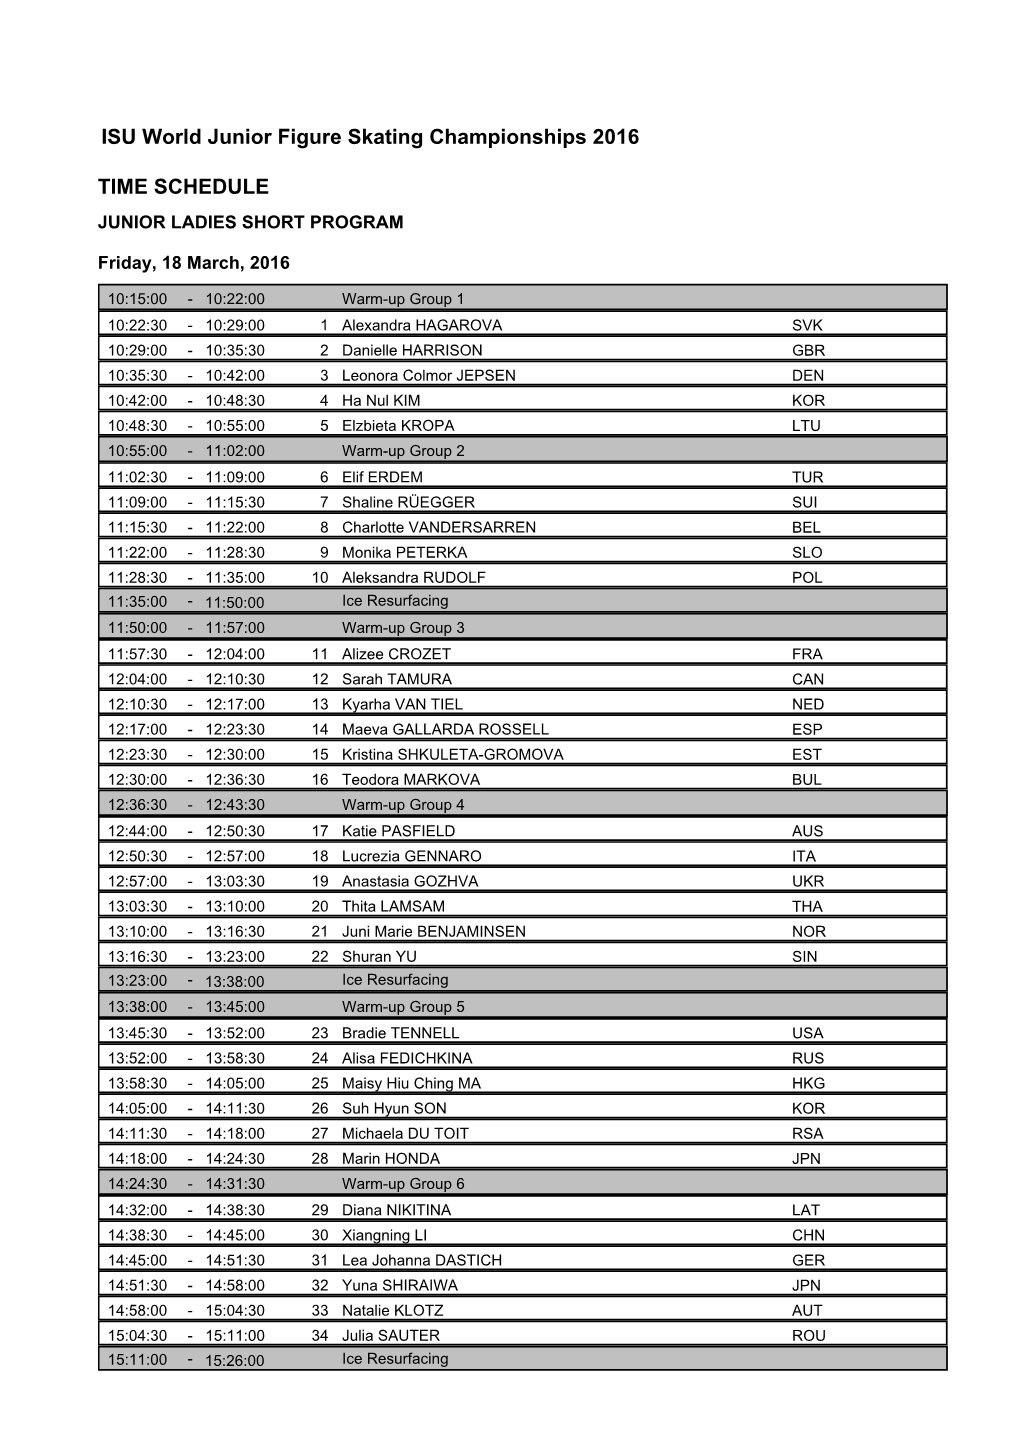 ISU World Junior Figure Skating Championships 2016 TIME